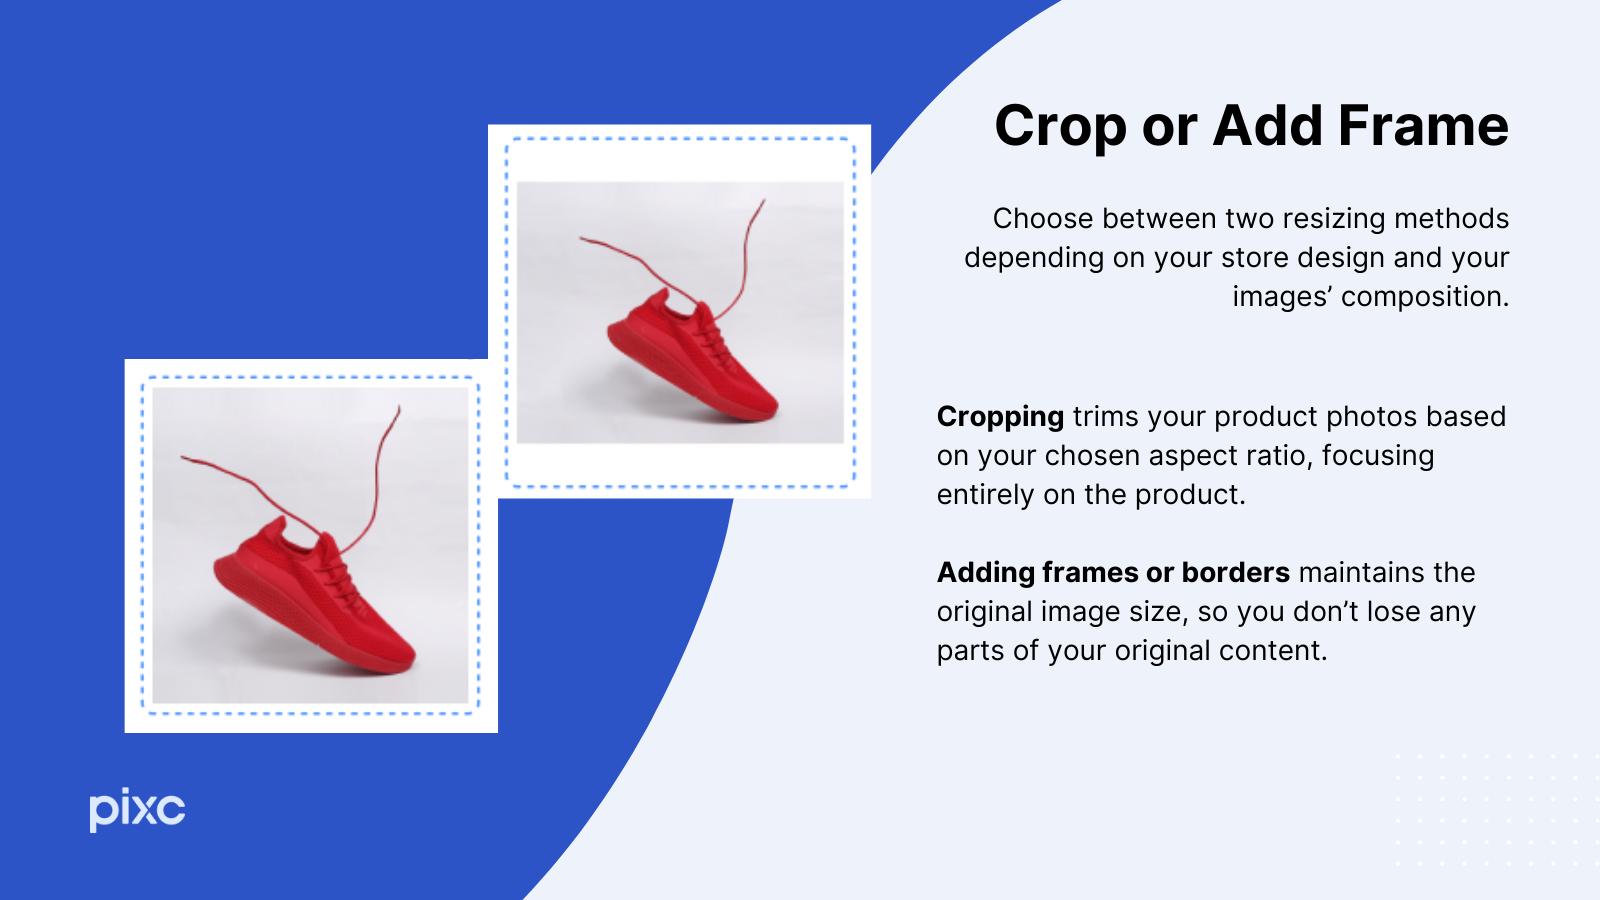 Choose between two resizing methods: cropping or adding frame